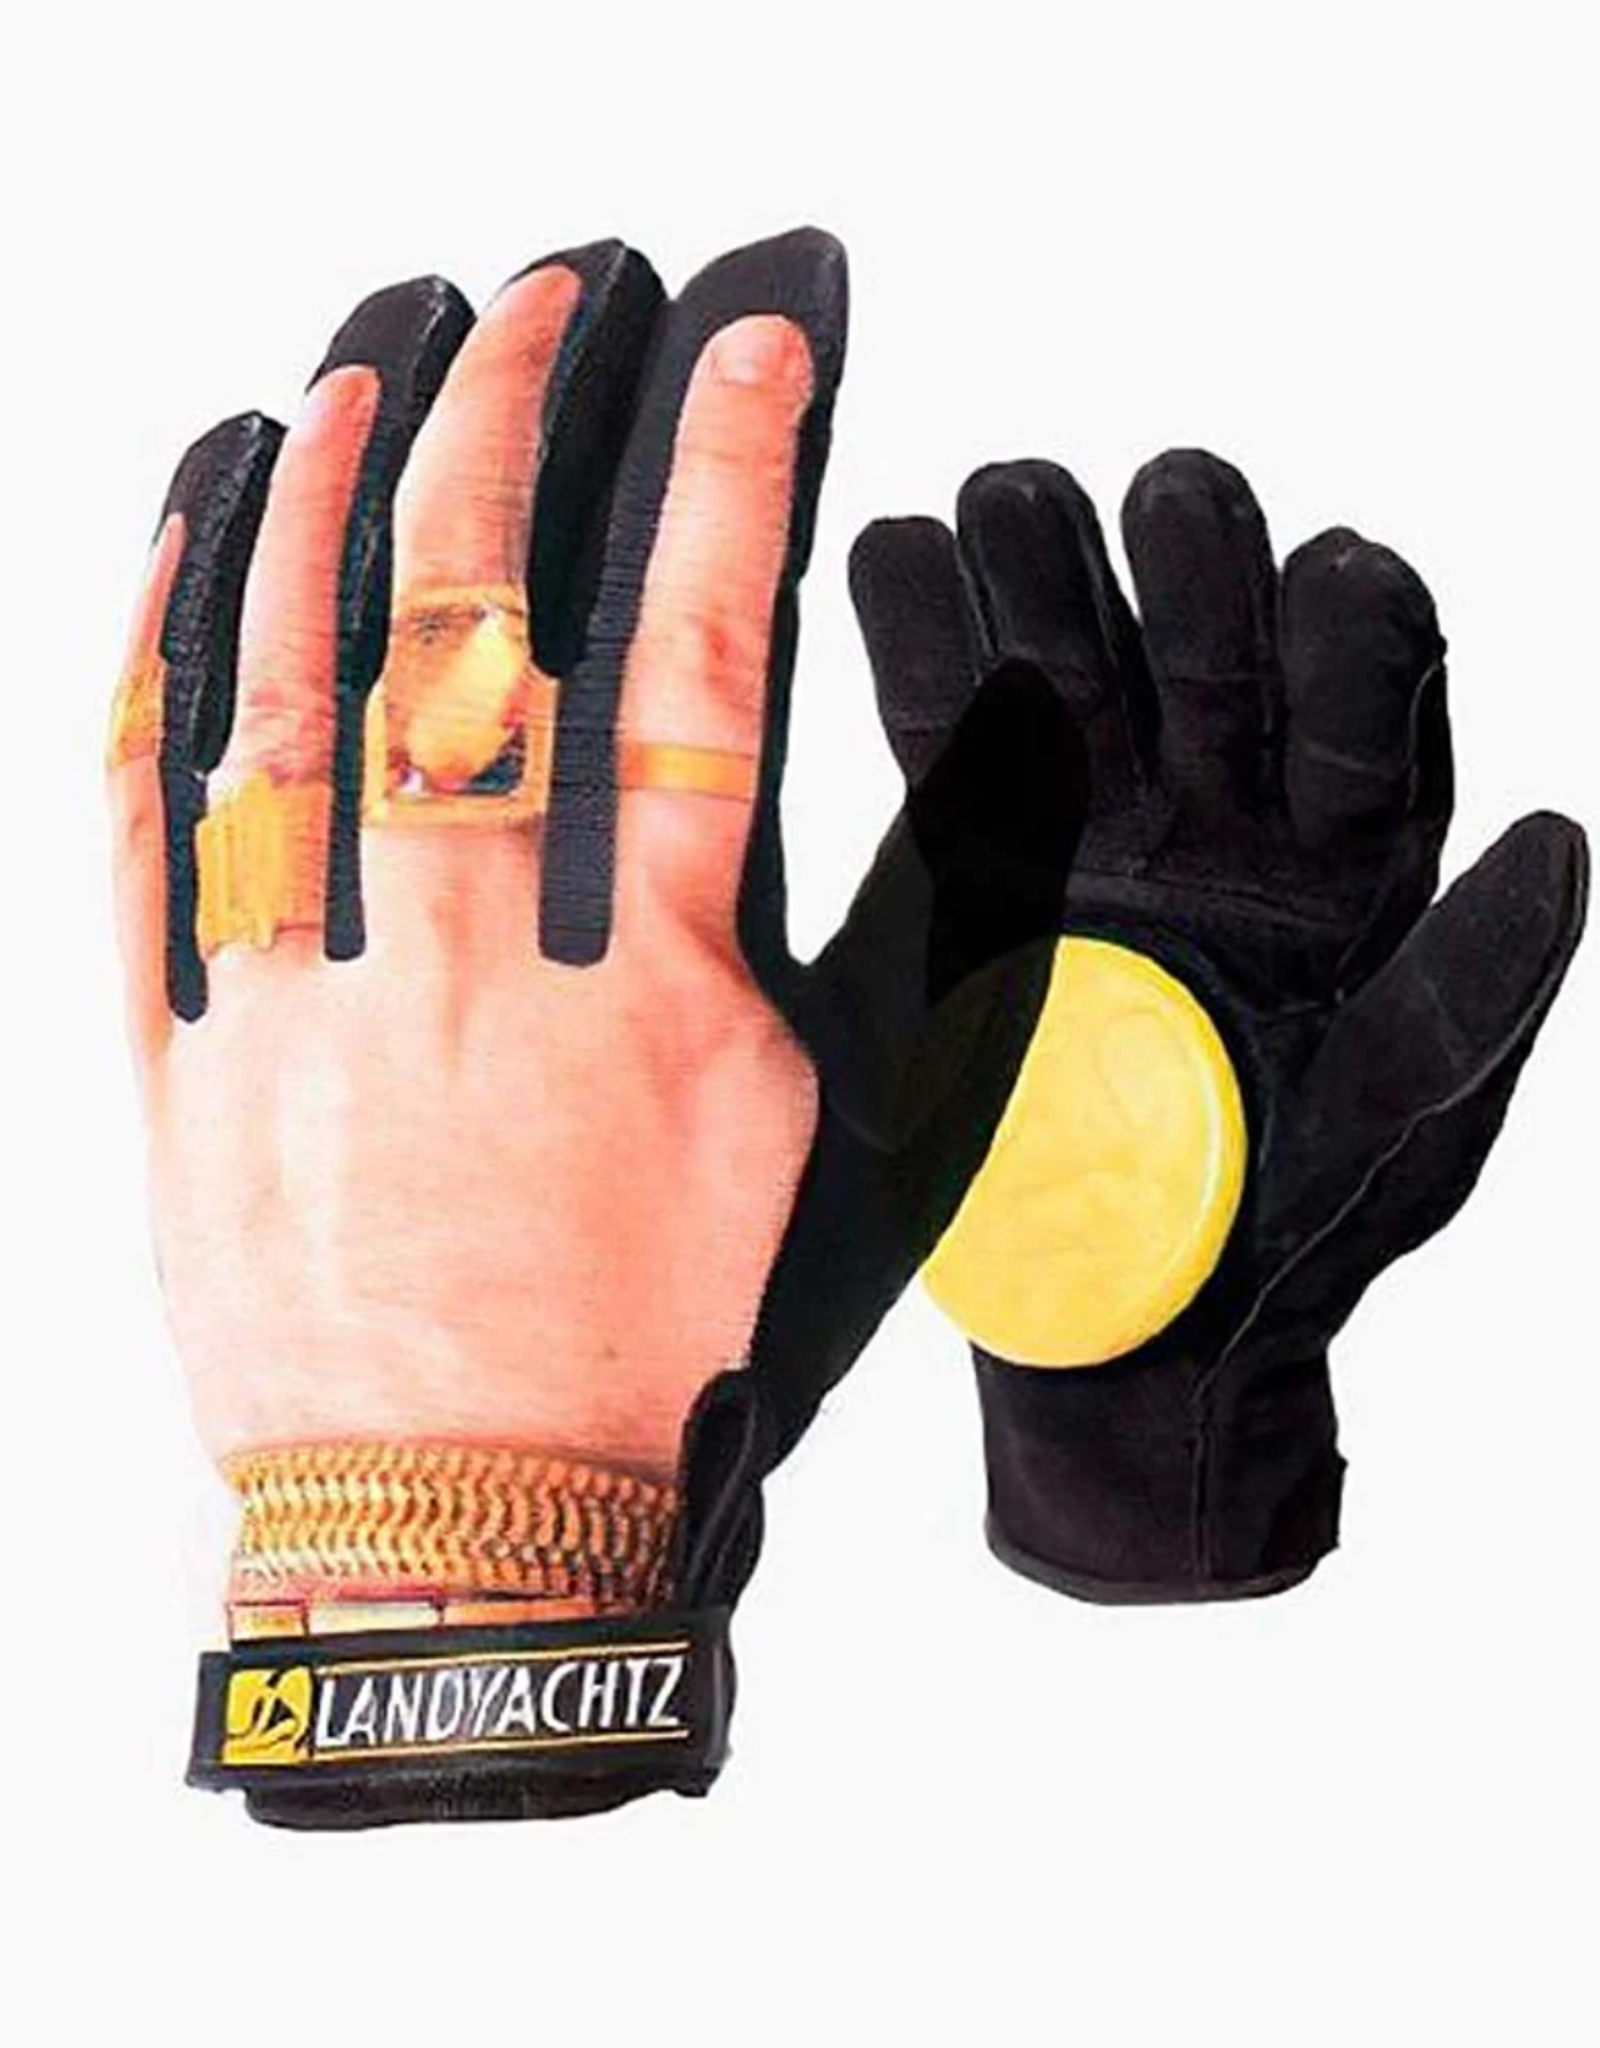 Landyachtz Bling Hands Slide Glove - Medium w/ Slide Pucks